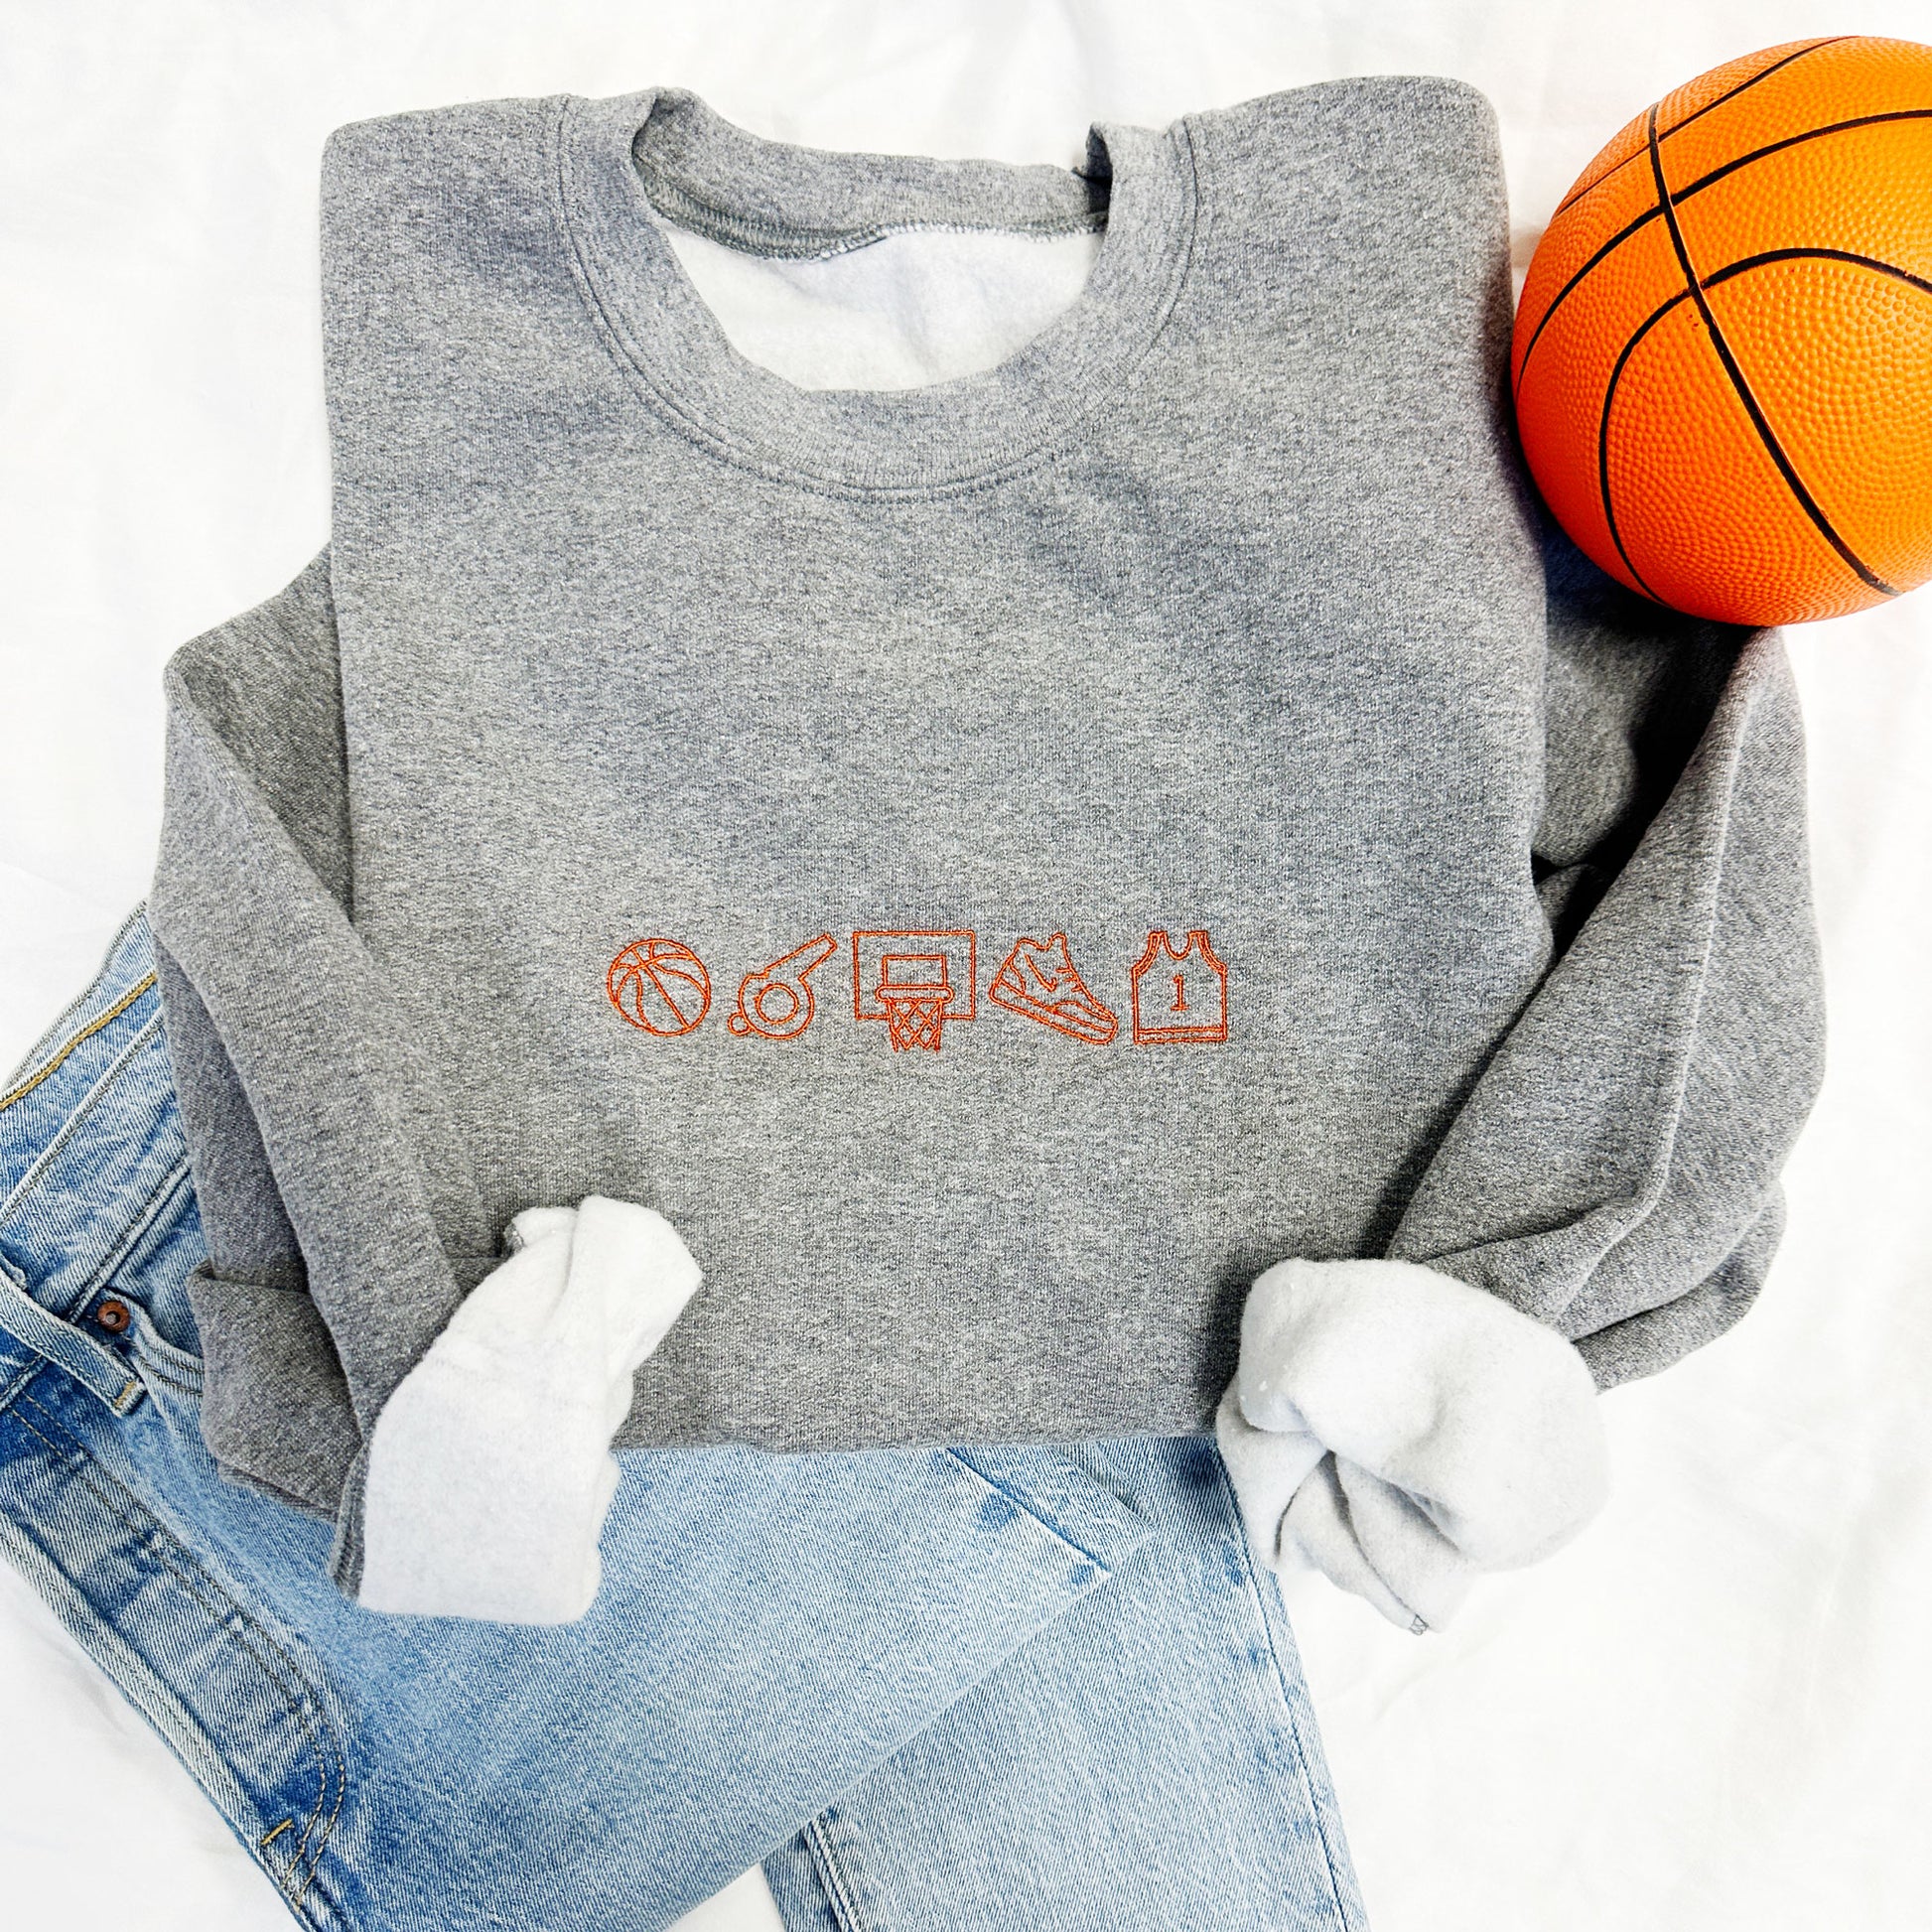 Graphite heather crewneck sweatshirt with basketball icons embroidered in orange thread